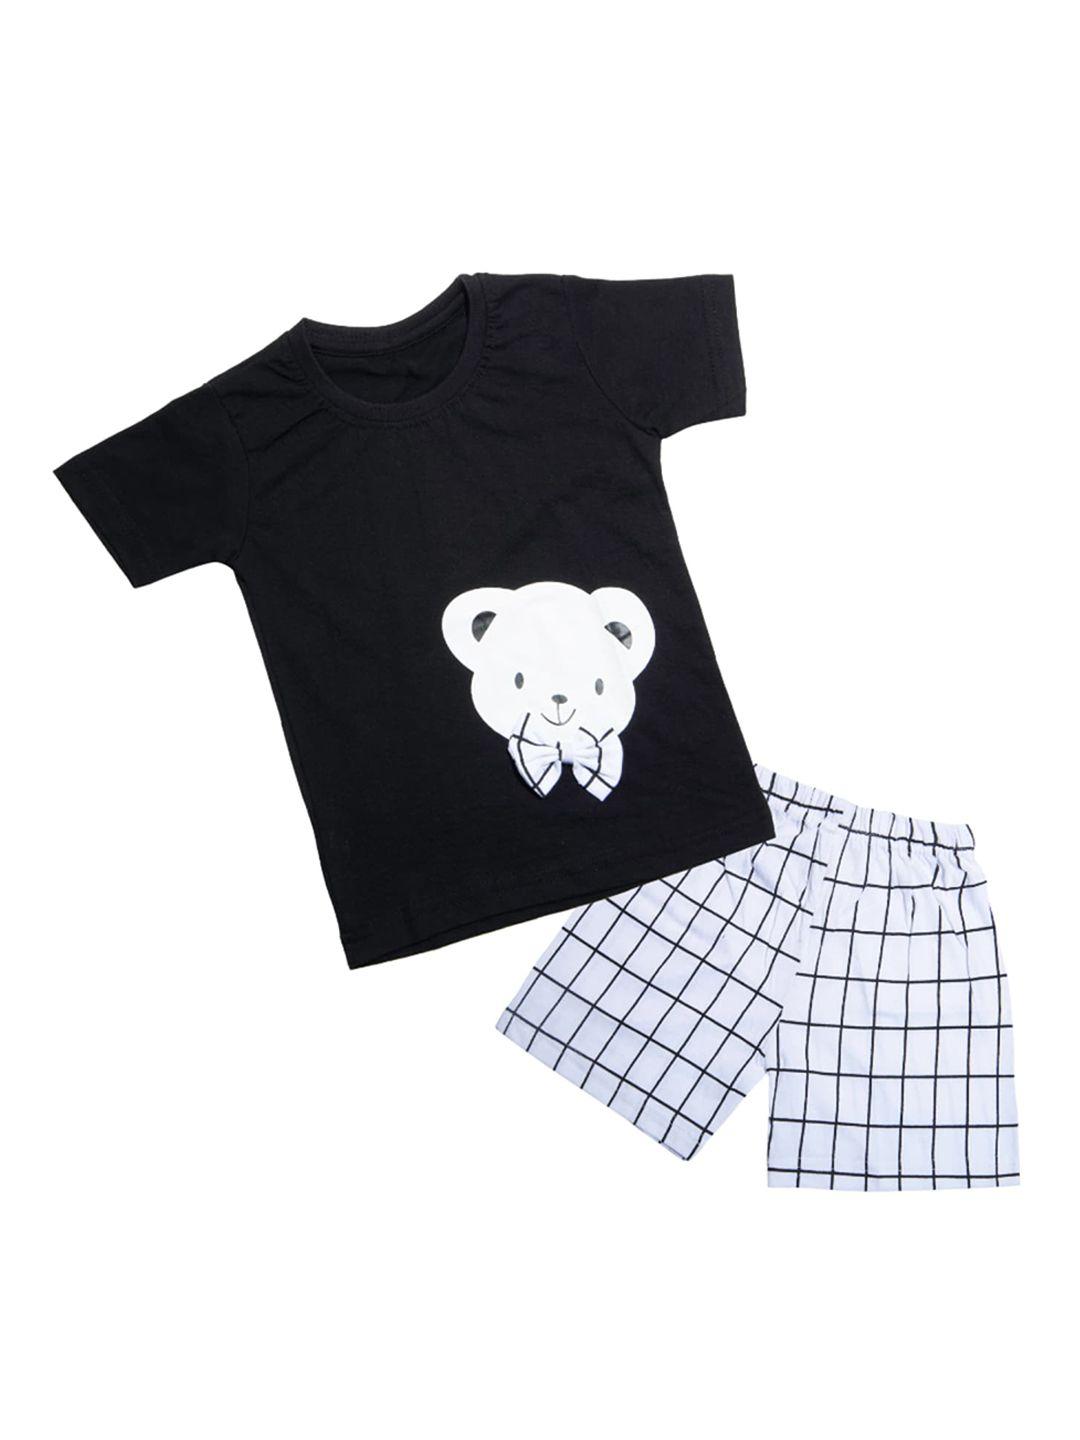 catcub unisex kids black & white printed t-shirt with shorts